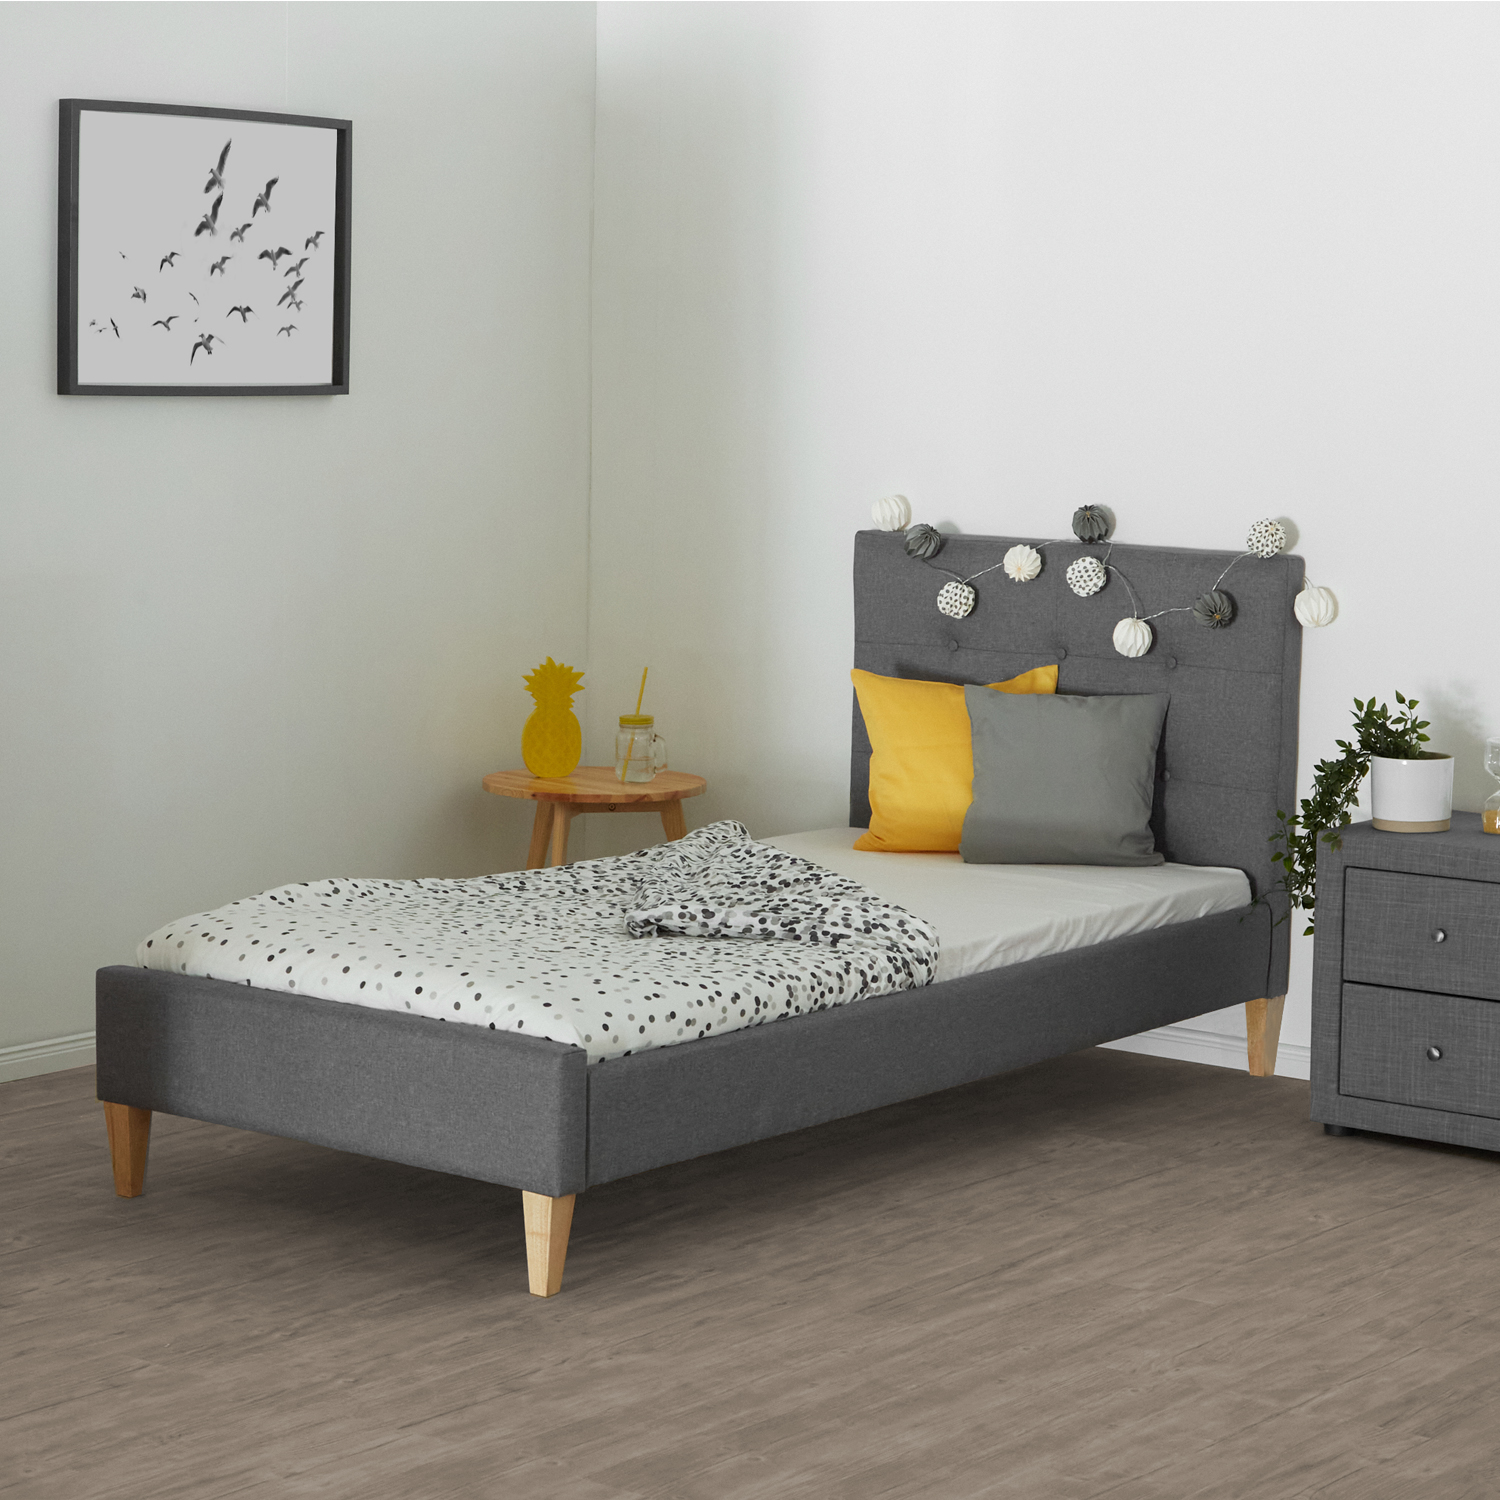 Upholstered Bed Frame Single Bed 90x200 Grey Platform Bed Fabric Headboard